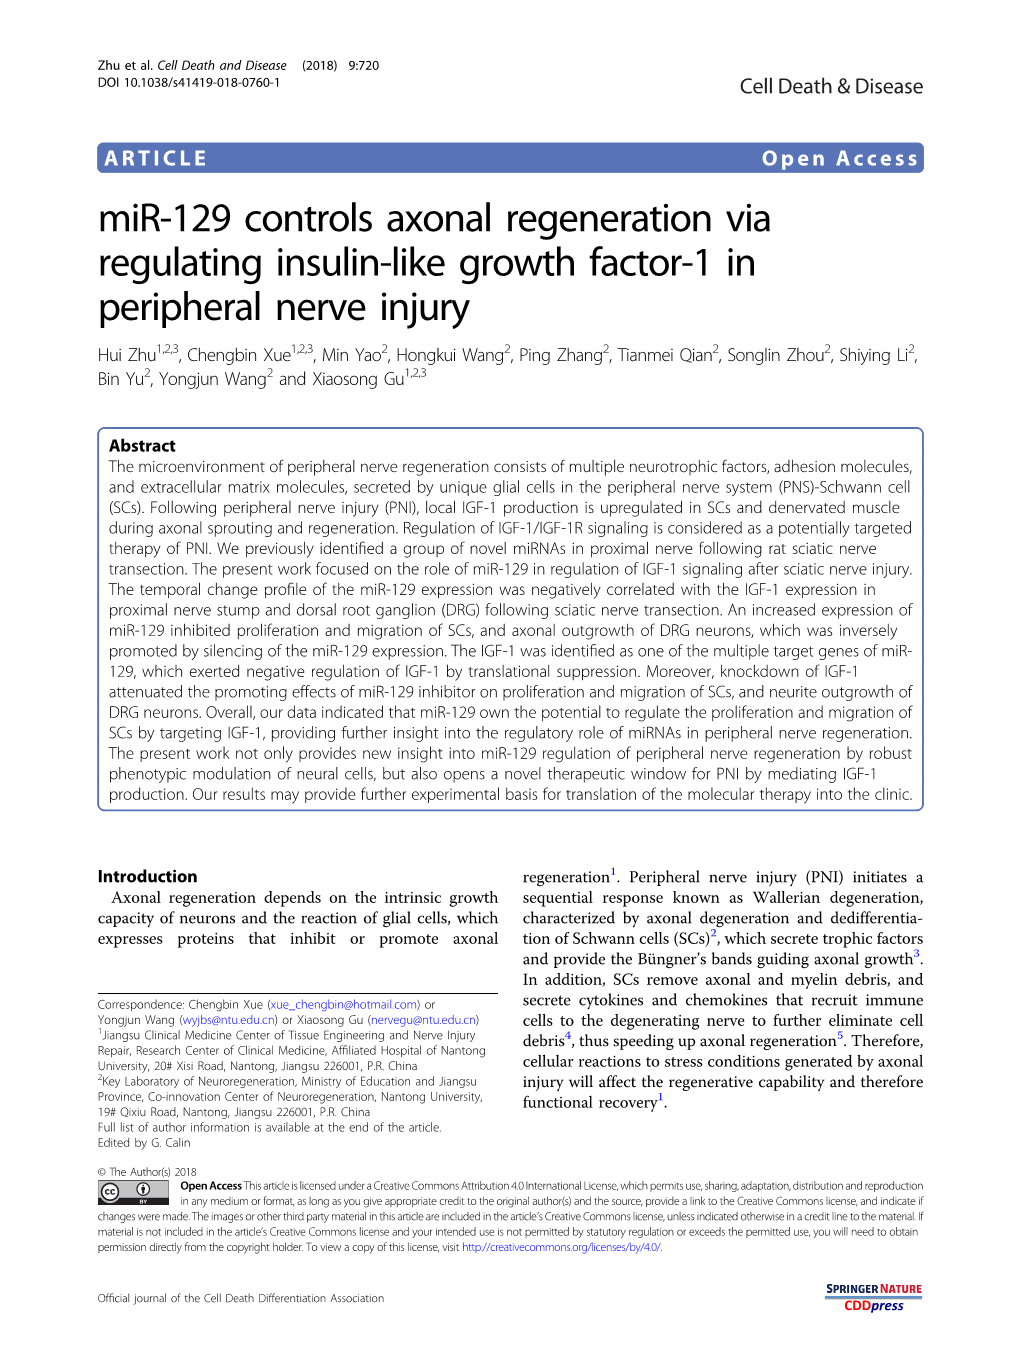 Mir-129 Controls Axonal Regeneration Via Regulating Insulin-Like Growth